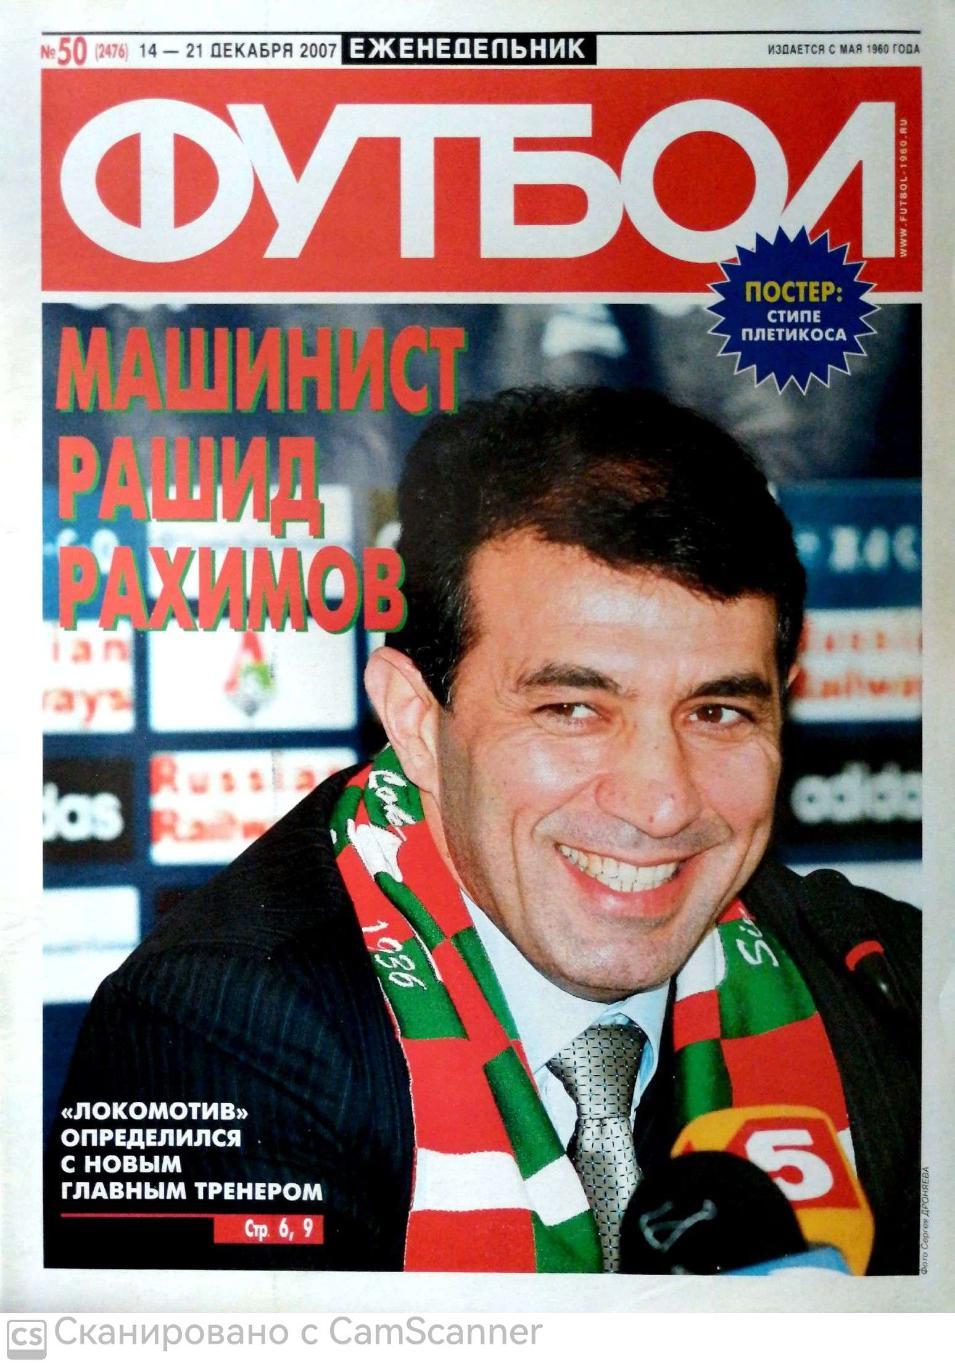 Еженедельник «Футбол» (Москва). 2007 год. №50